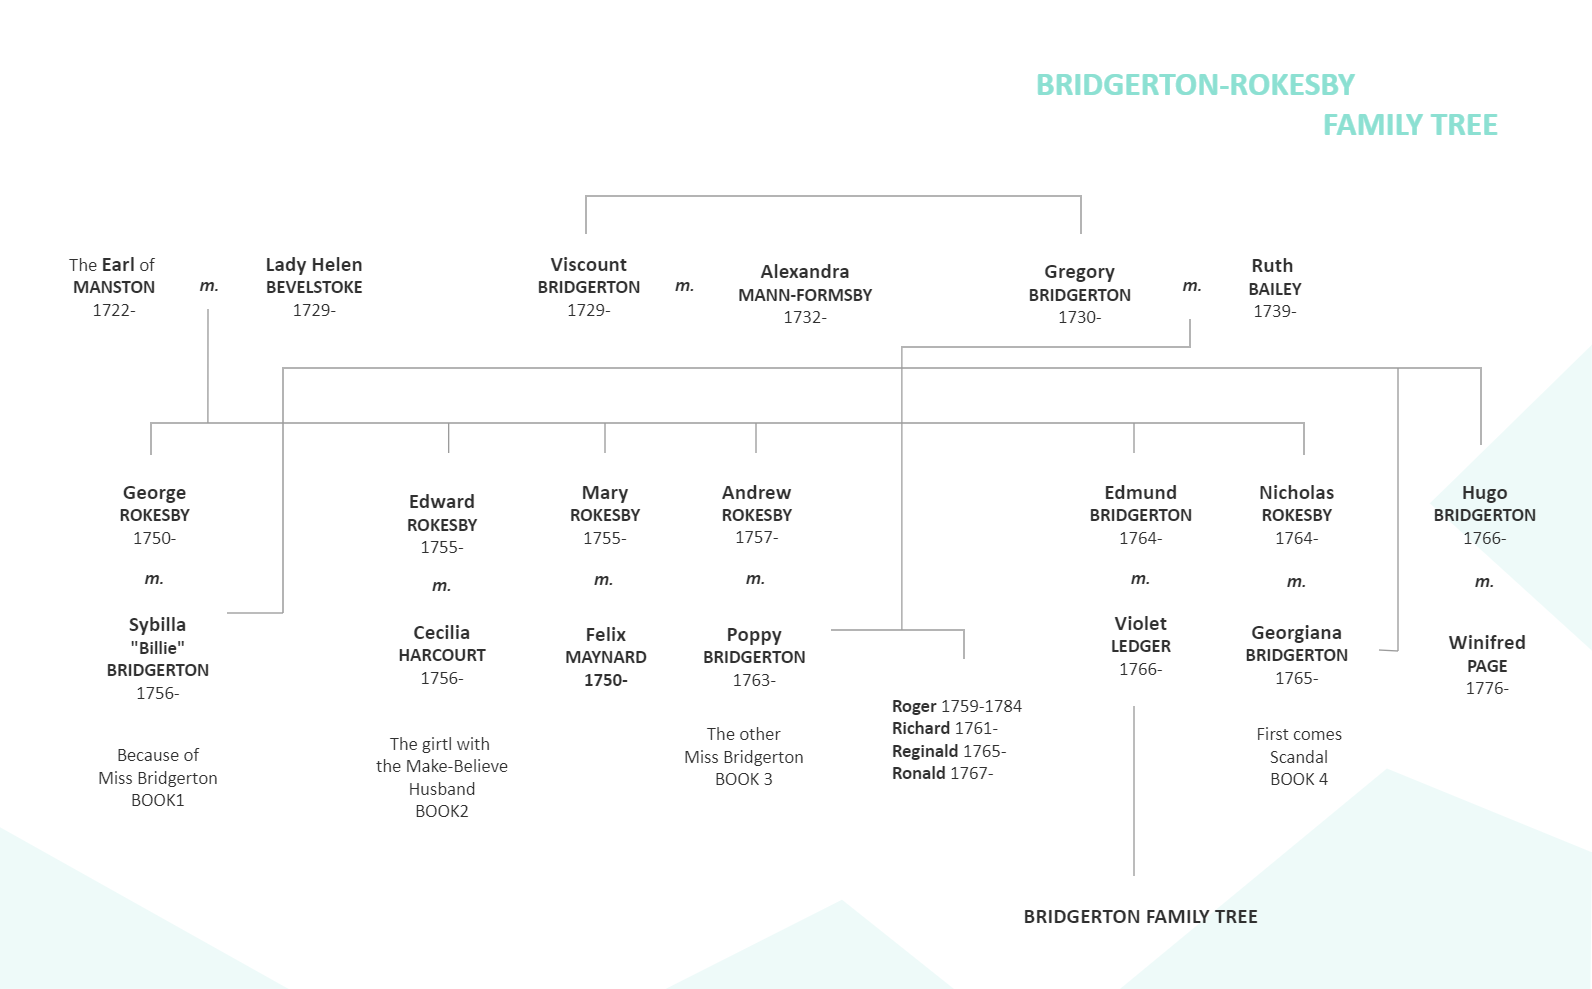 Bridgerton Family Tree